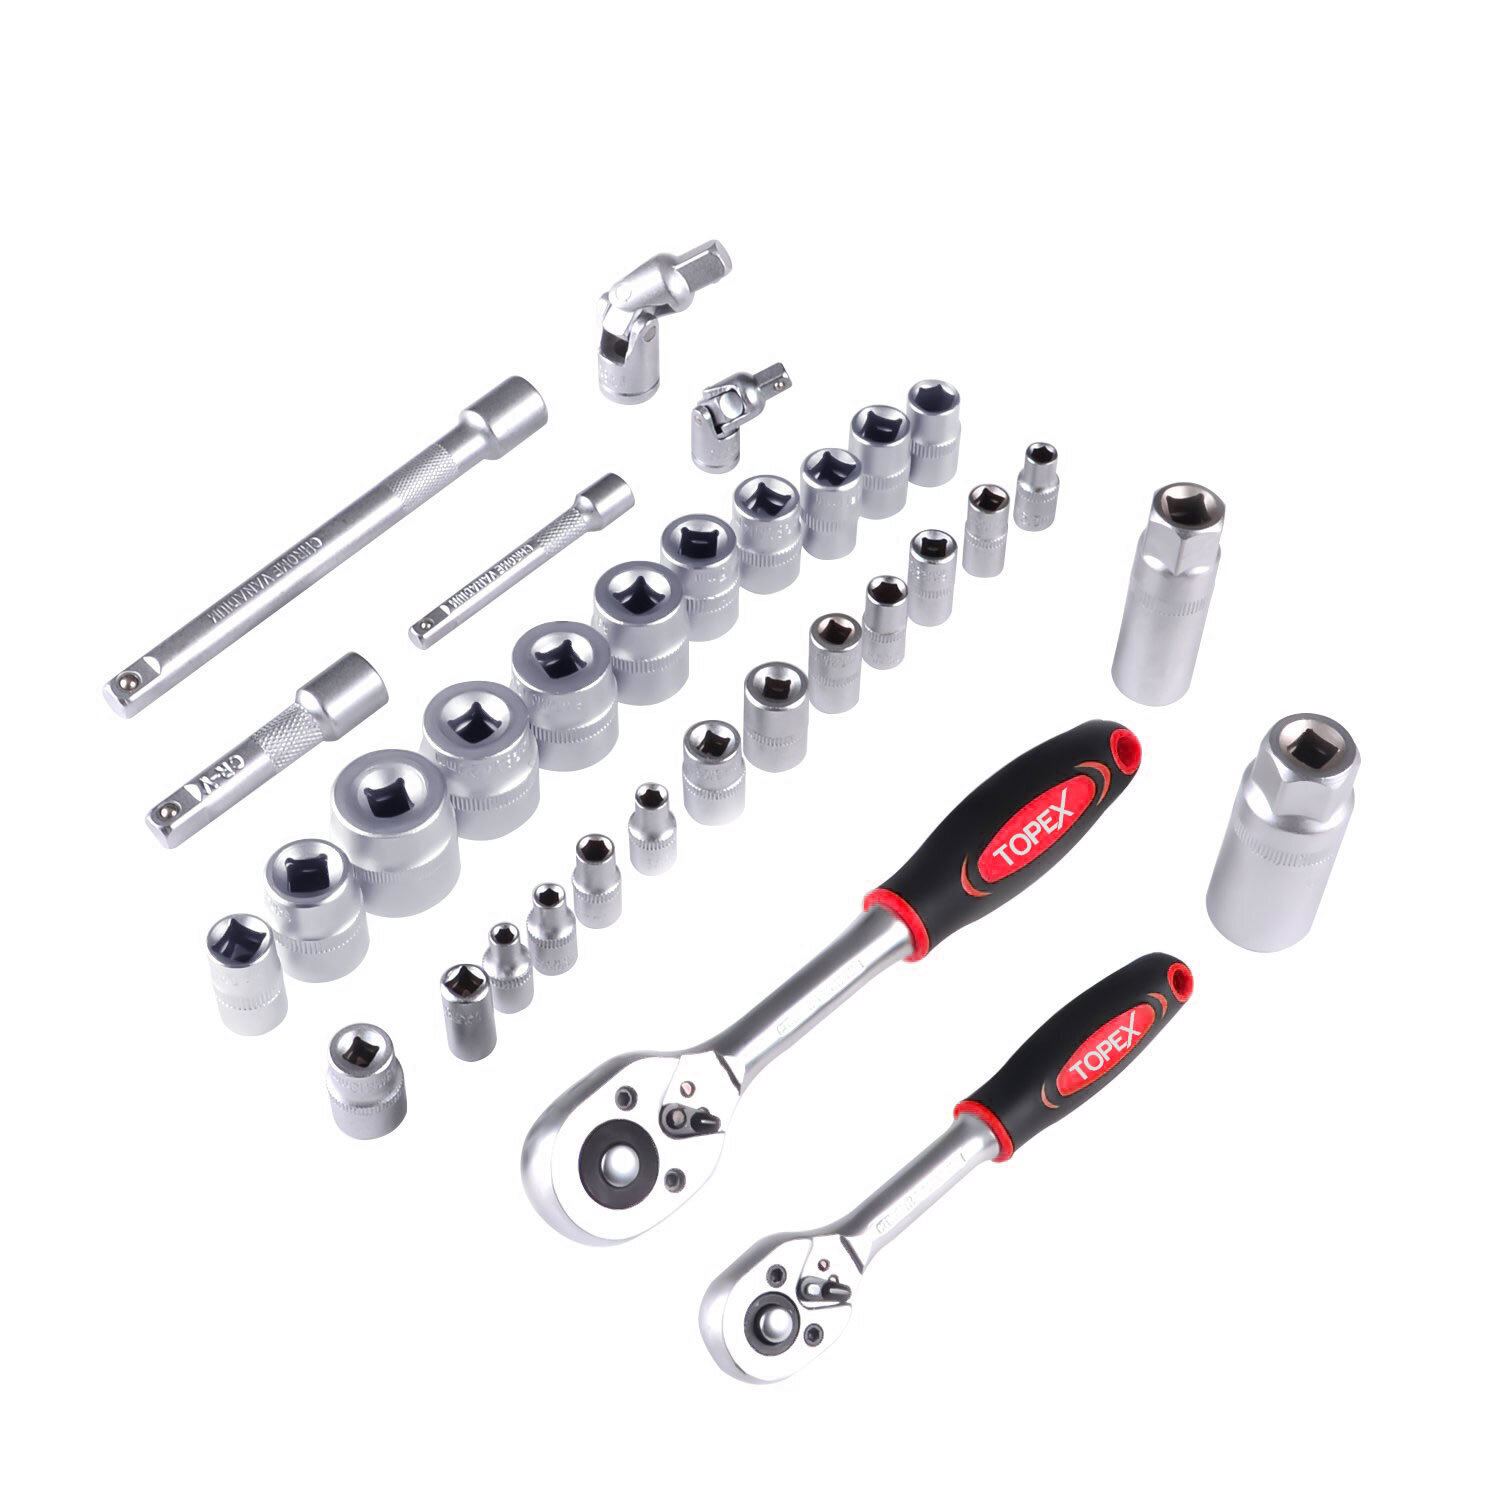 TOPEX 65-Piece Household Hand Tool Set Home Auto Repair Kit Premium Quality